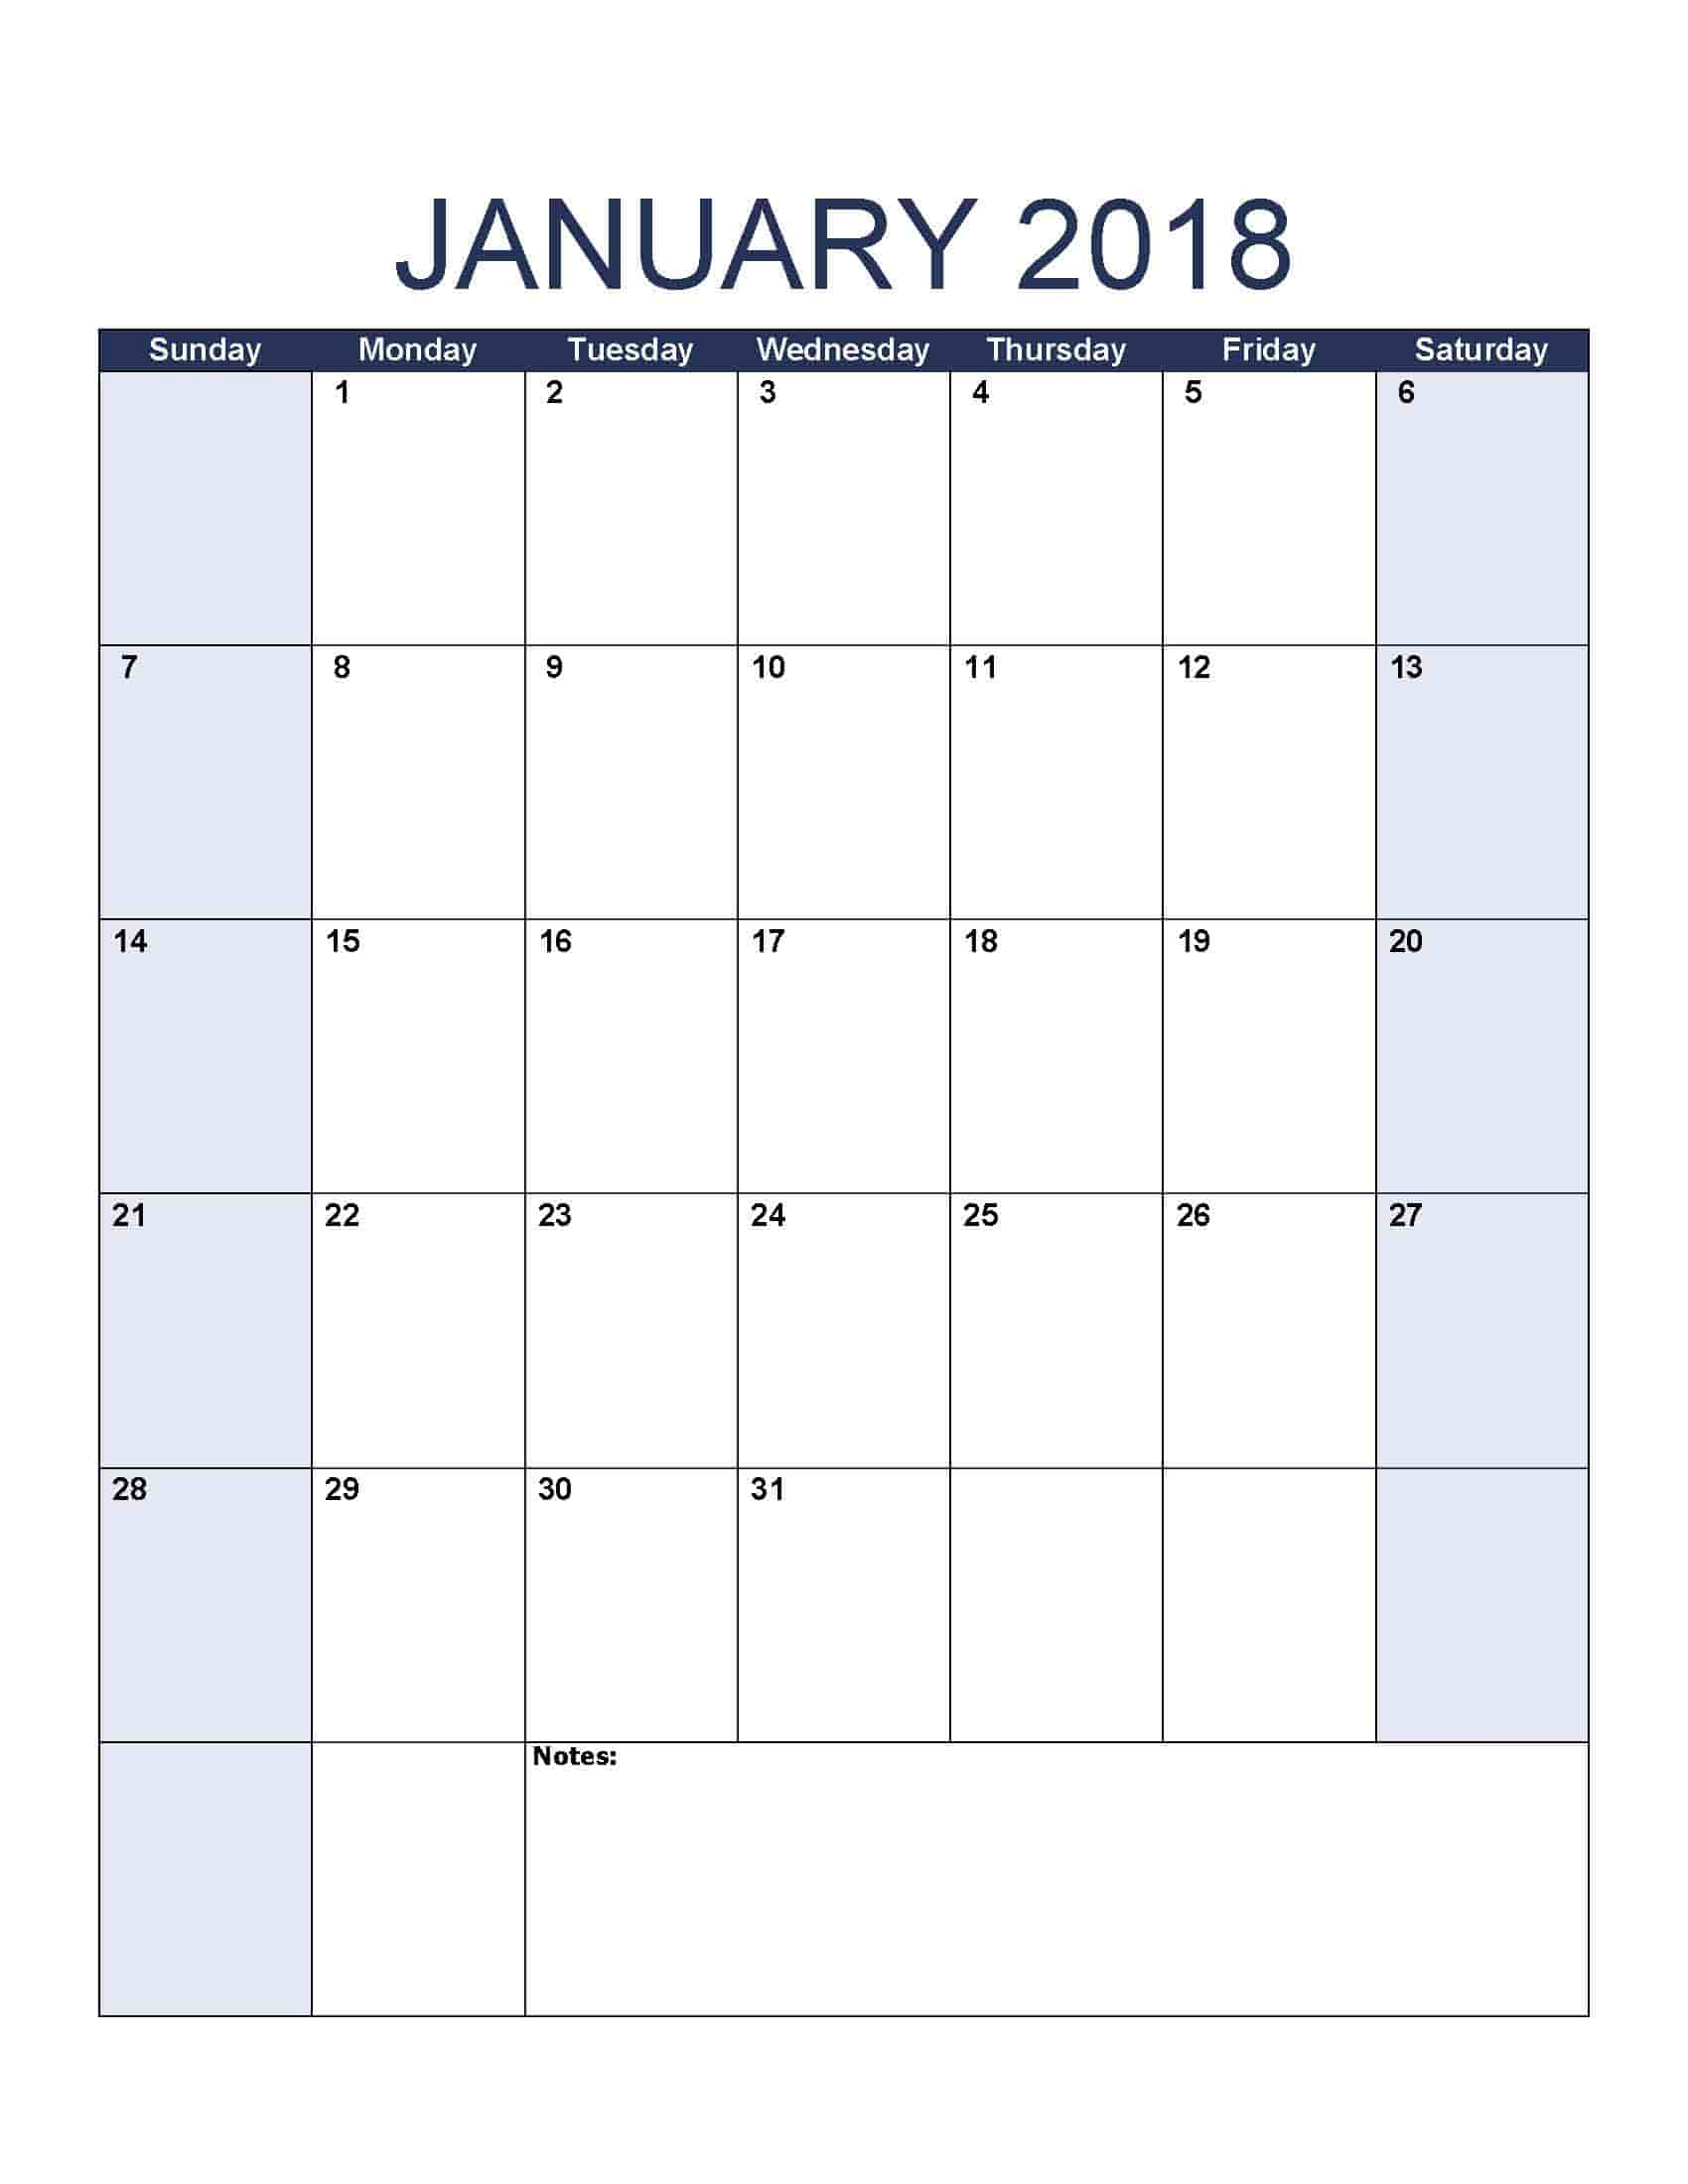 January 2018 Calendar - Free, Printable Calendar Templates